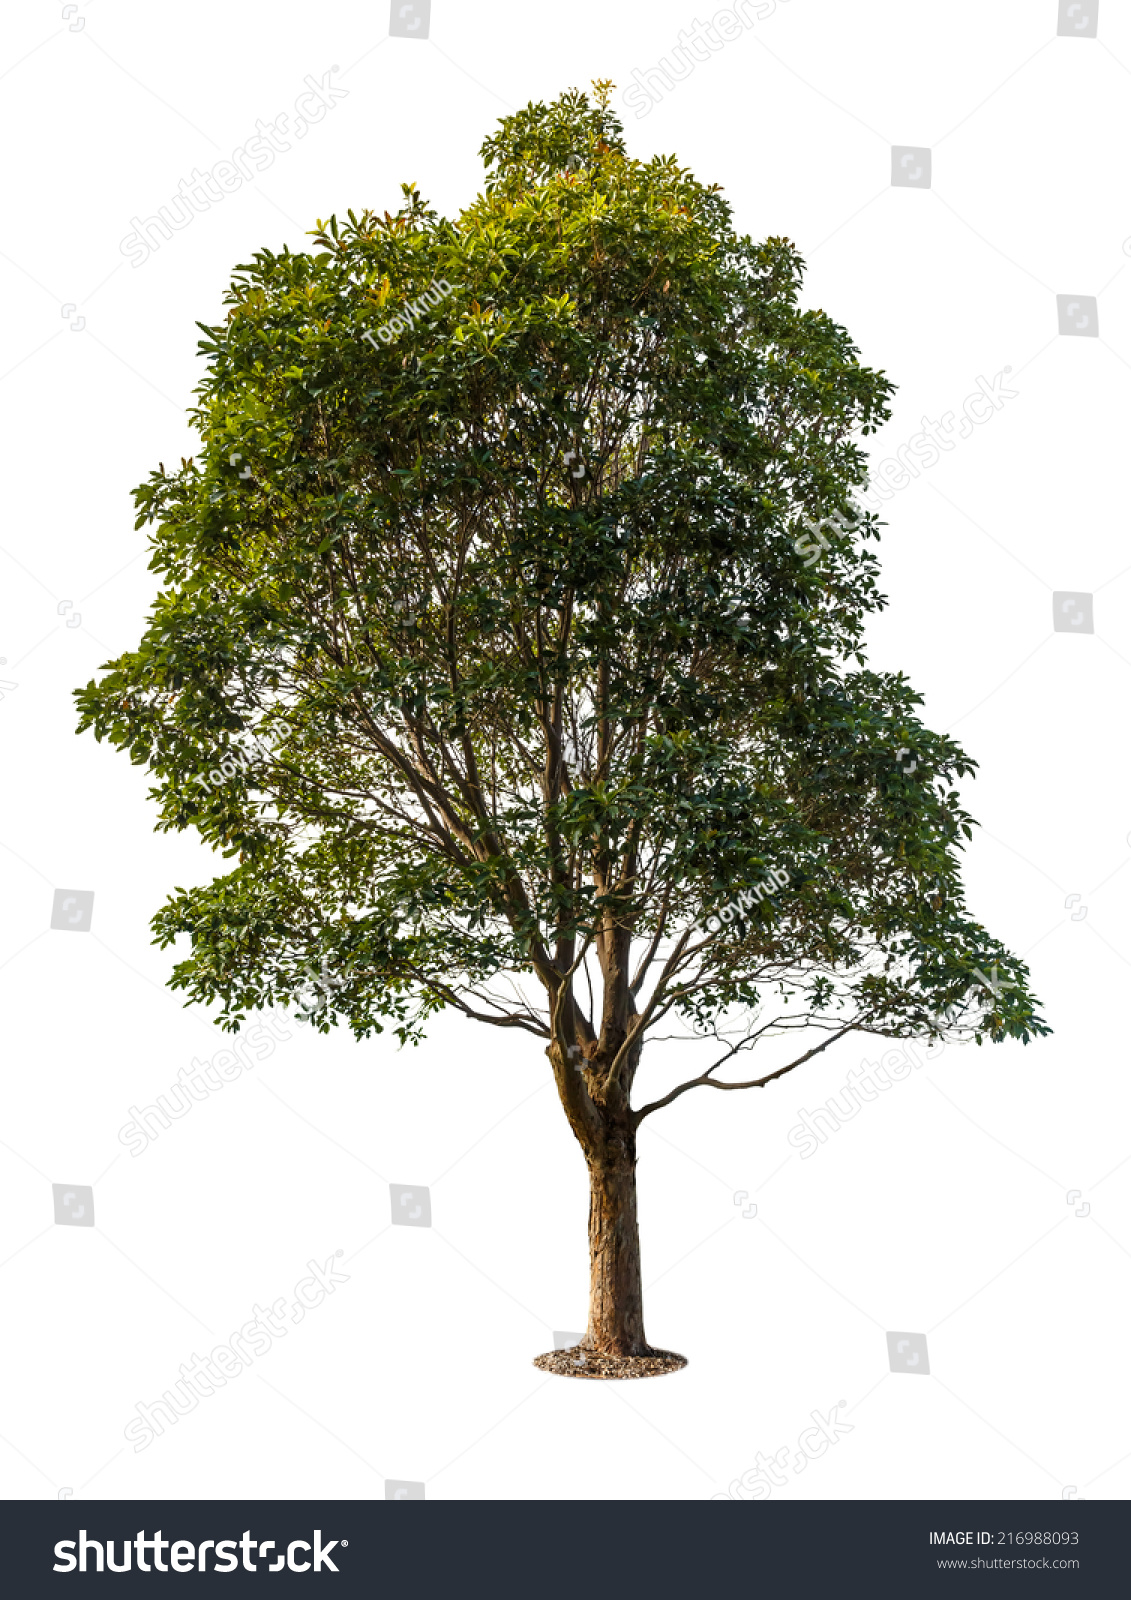 Eucalyptus Tree Isolated On White Stock Photo 216988093 - Shutterstock